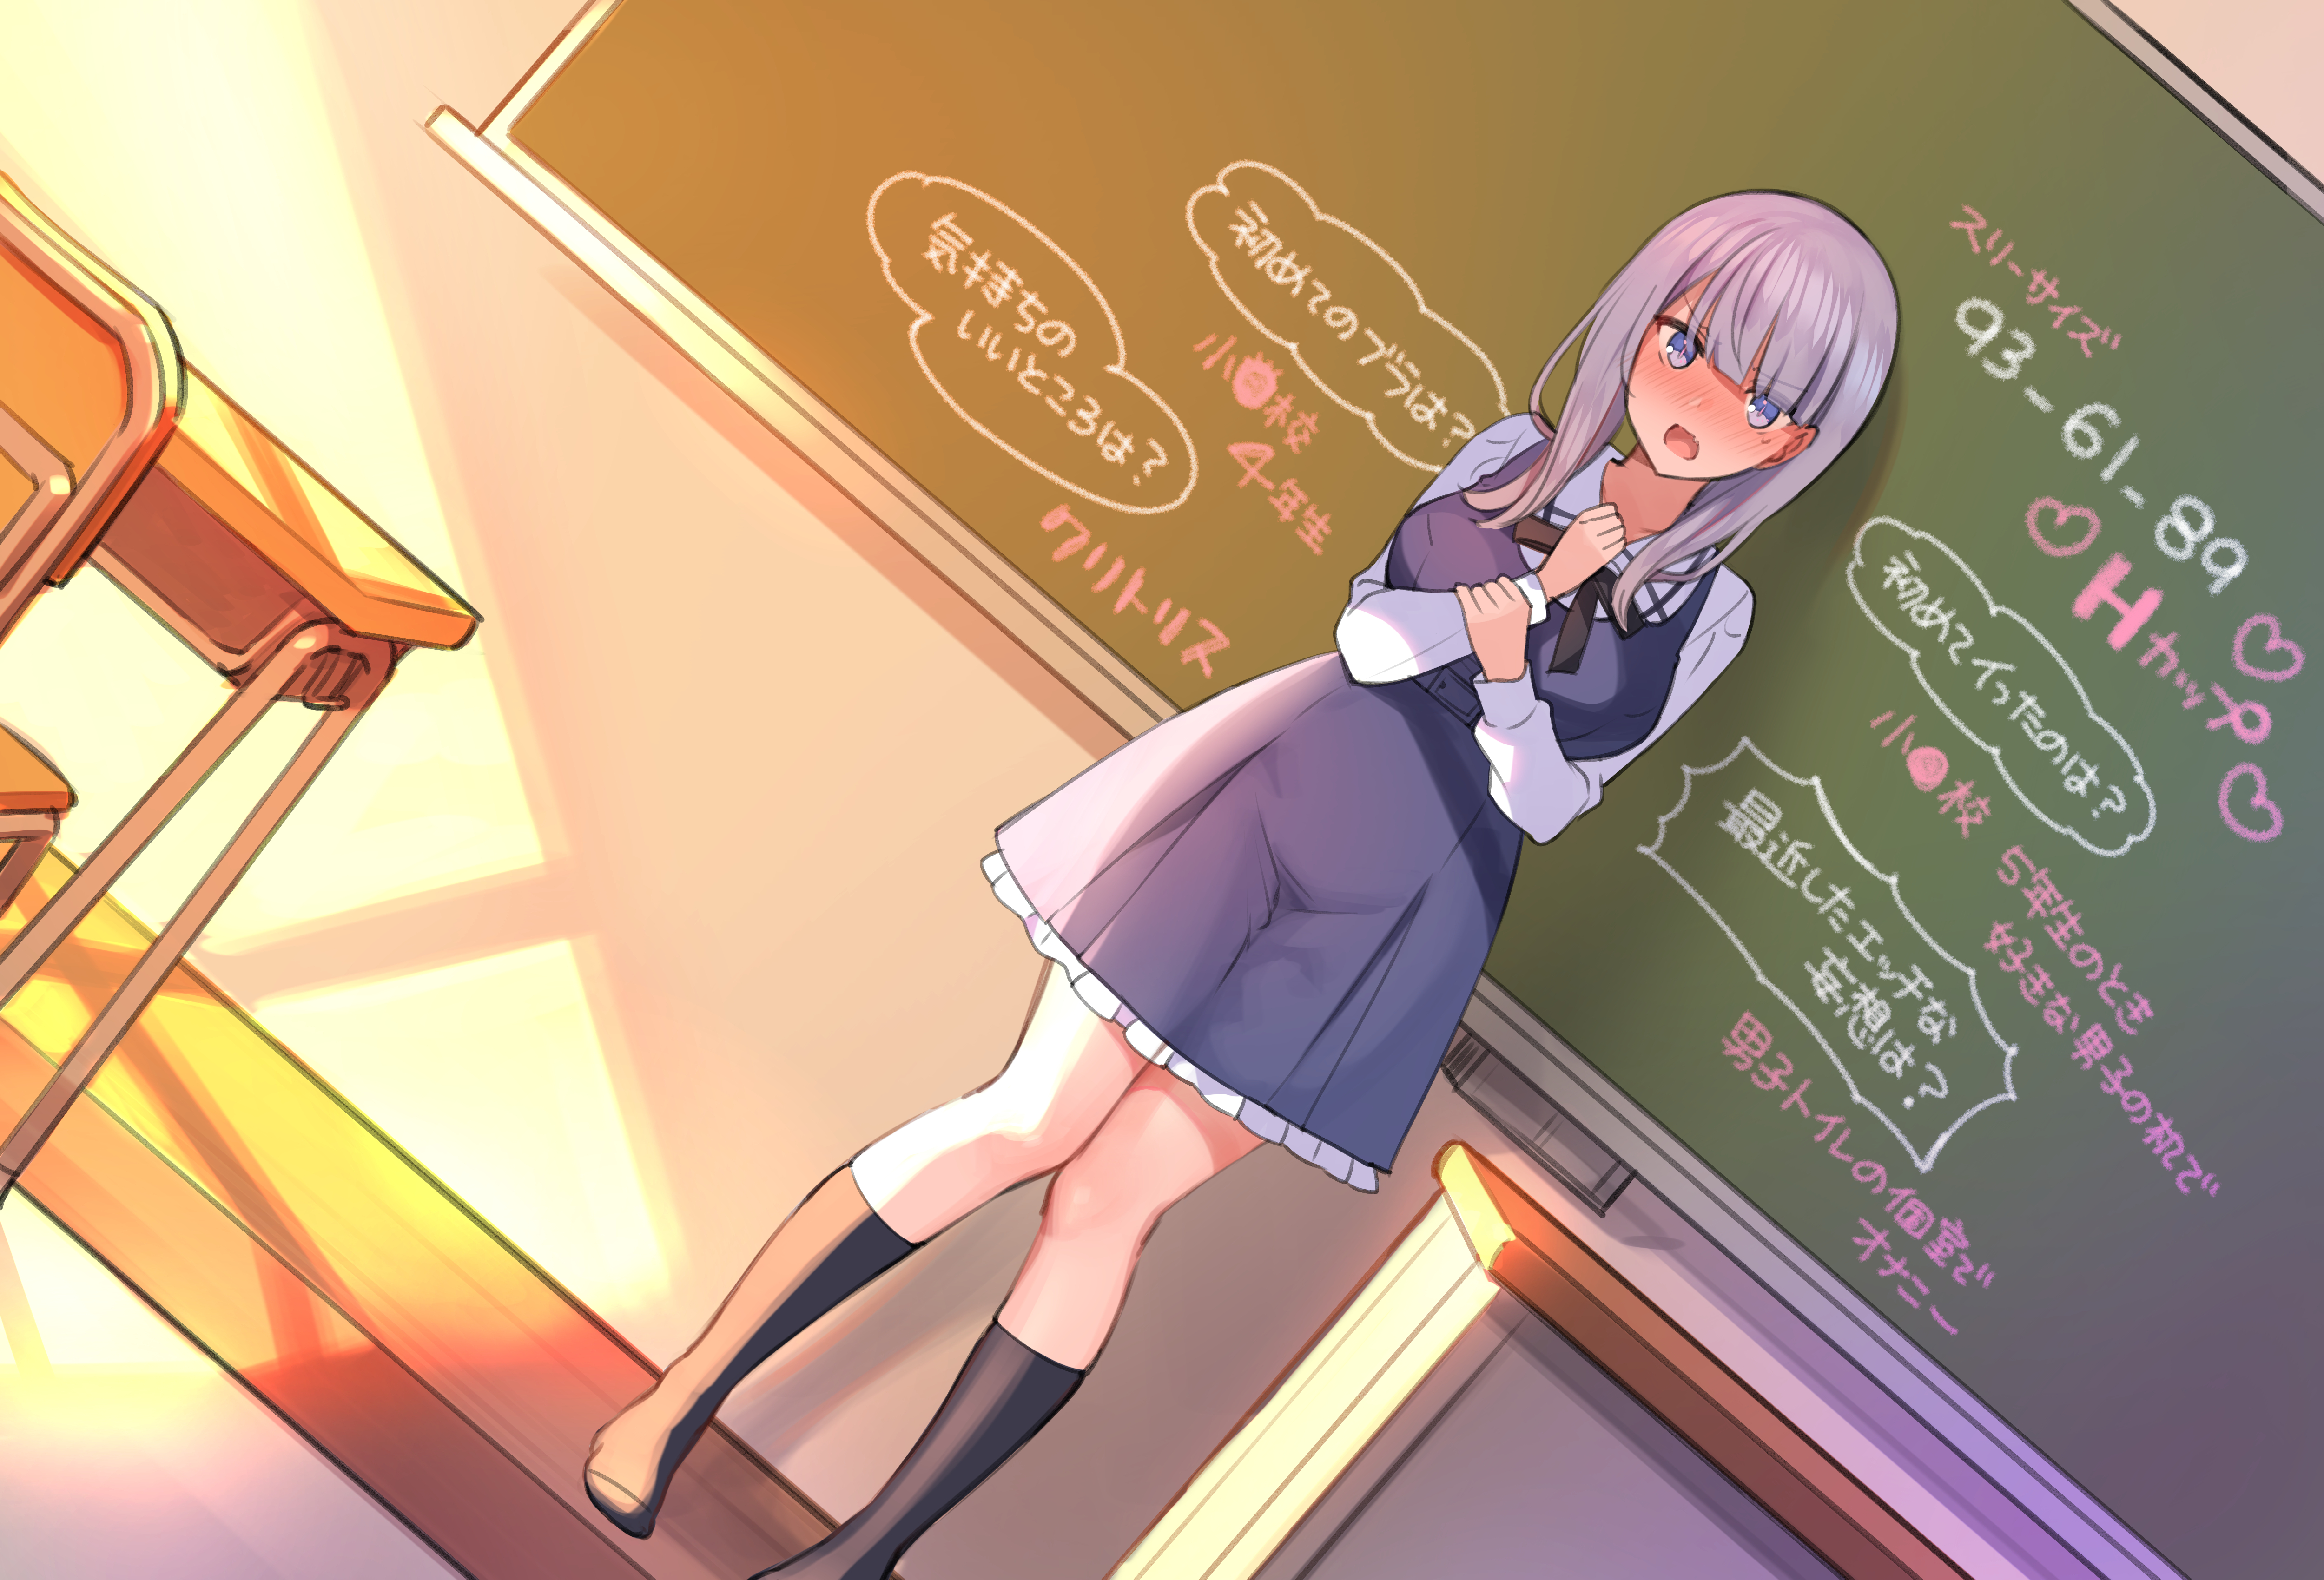 Mankai Kaika Anime Anime Girls Blushing Purple Hair Legs Dress Chalkboard Classroom 5000x3400